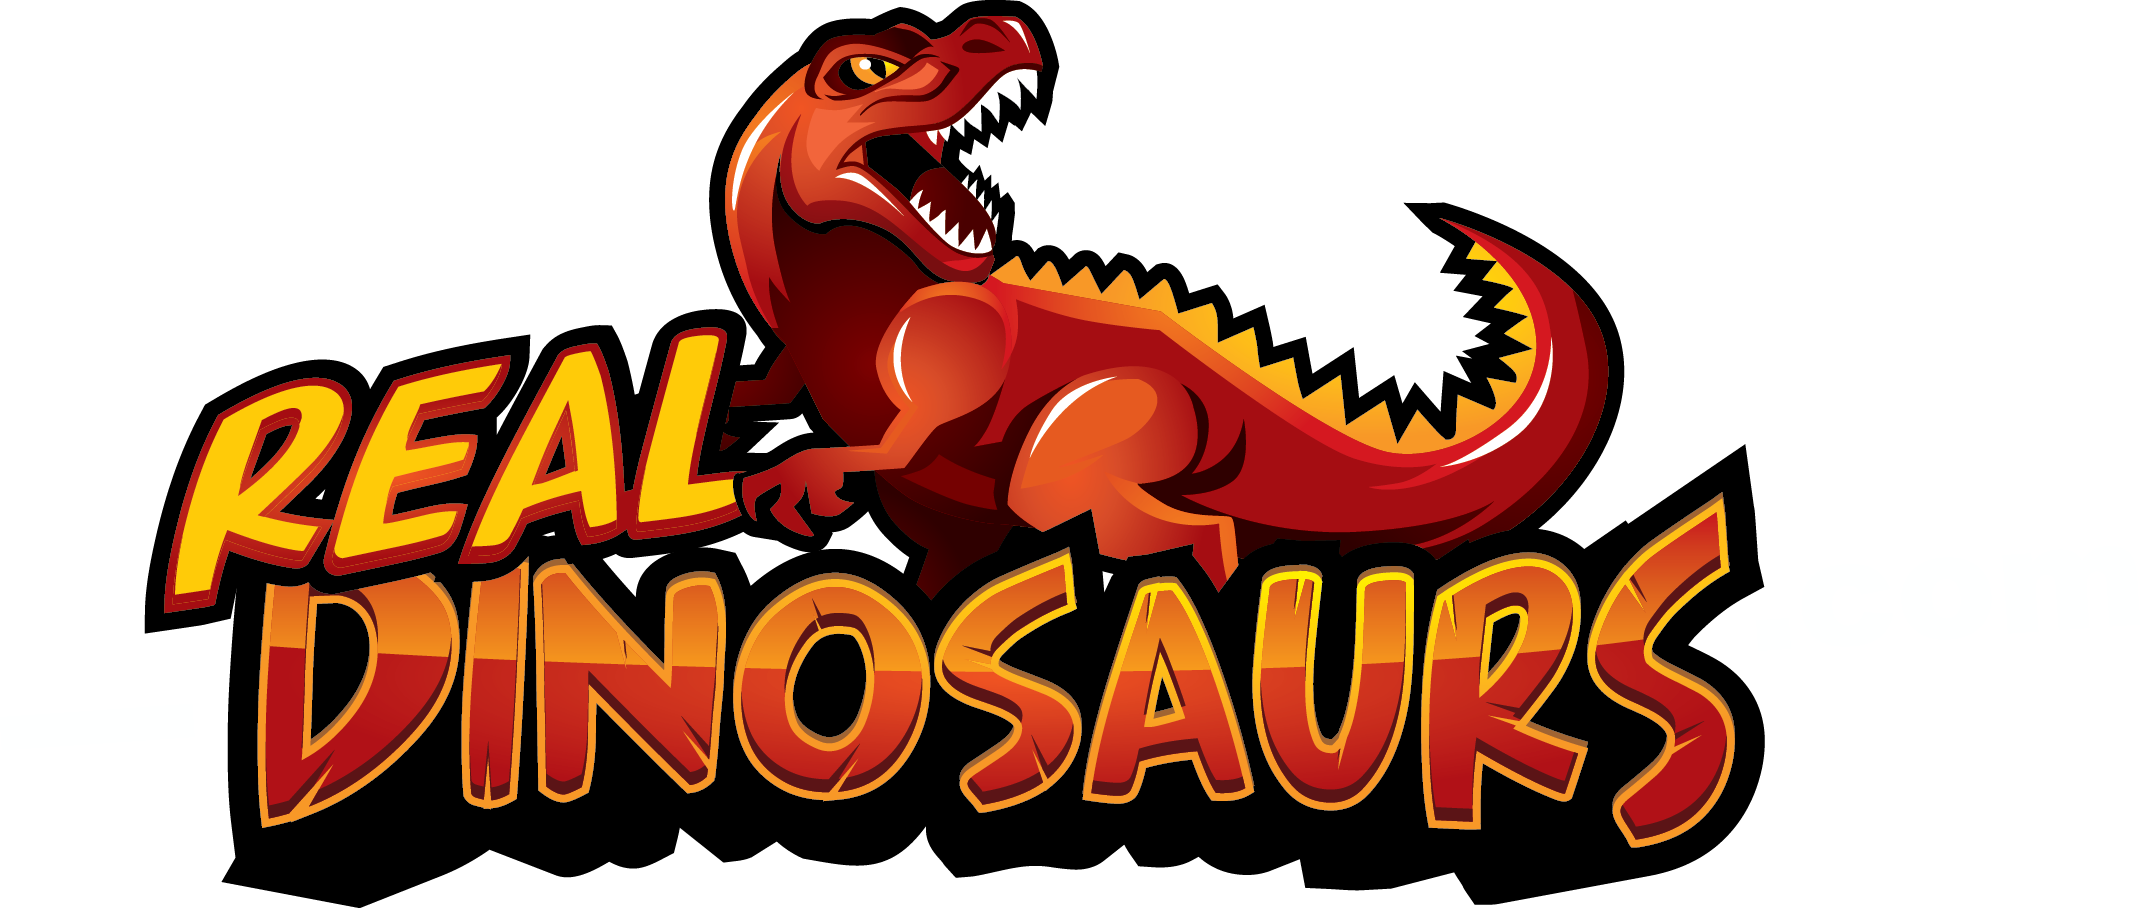 Dinosaurs clipart realistic dinosaur. Bookings real 